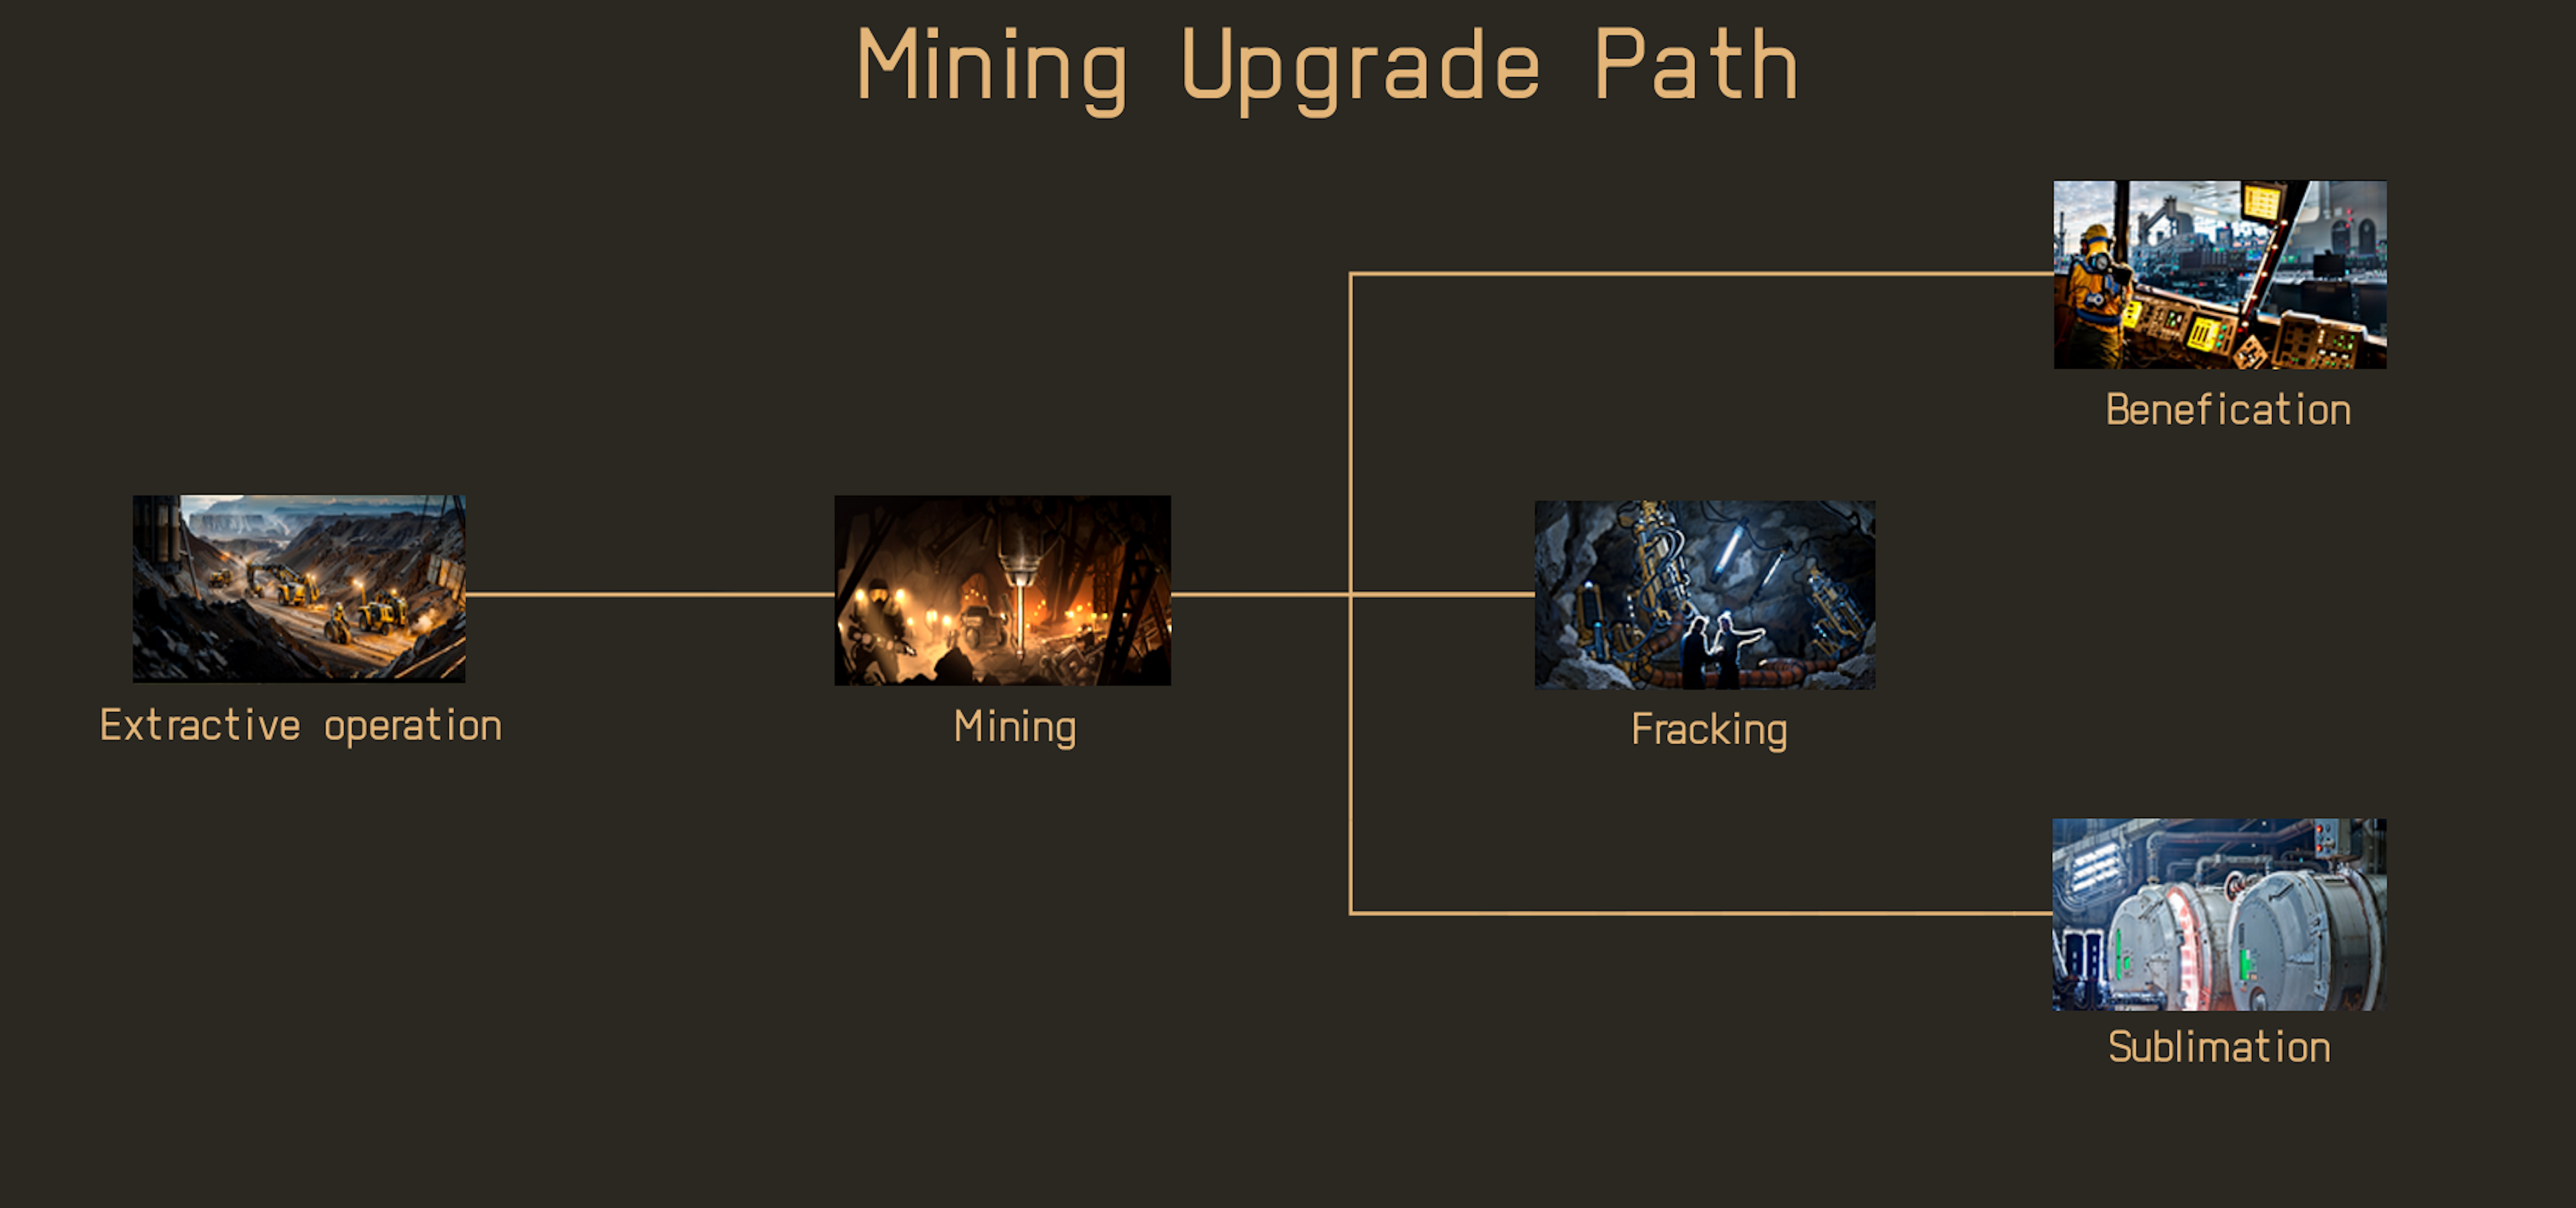 Mining Upgrade Path